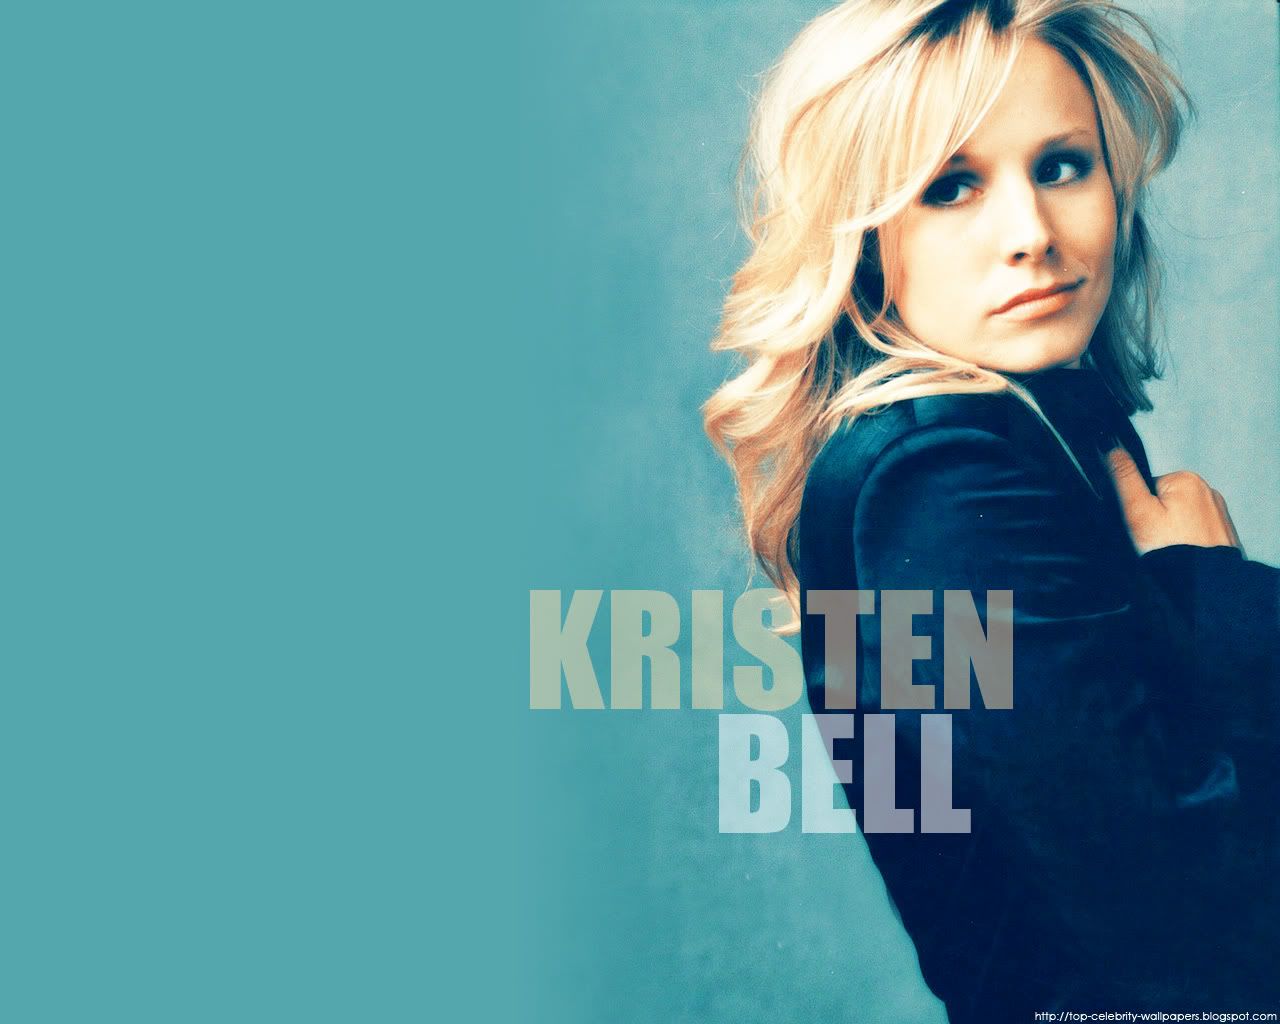 Kristen Bell Wallpaper, Veronica Mars, Heroes | TV Fanart, Wallpapers & Icons